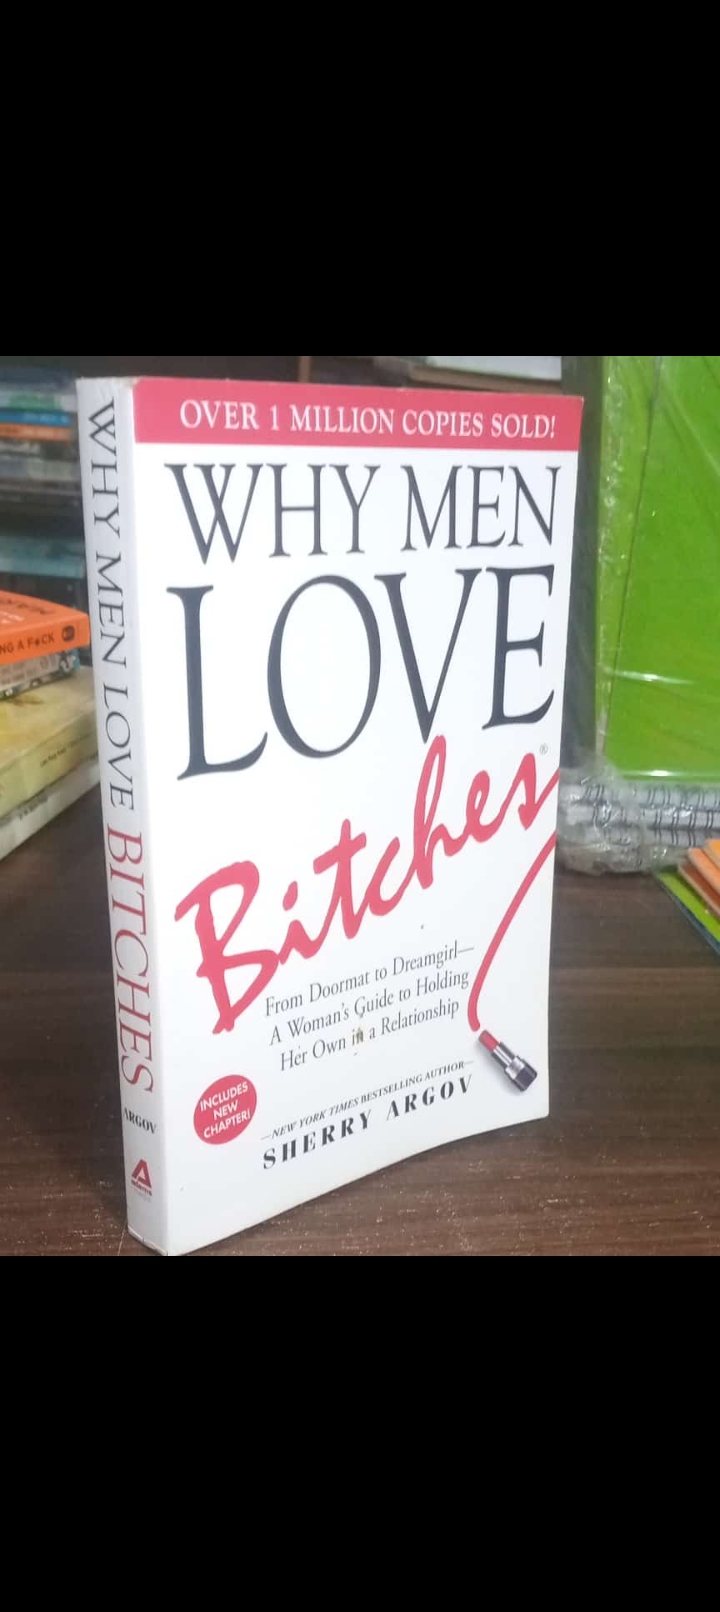 why men love bitches by sherry argov. original paperback